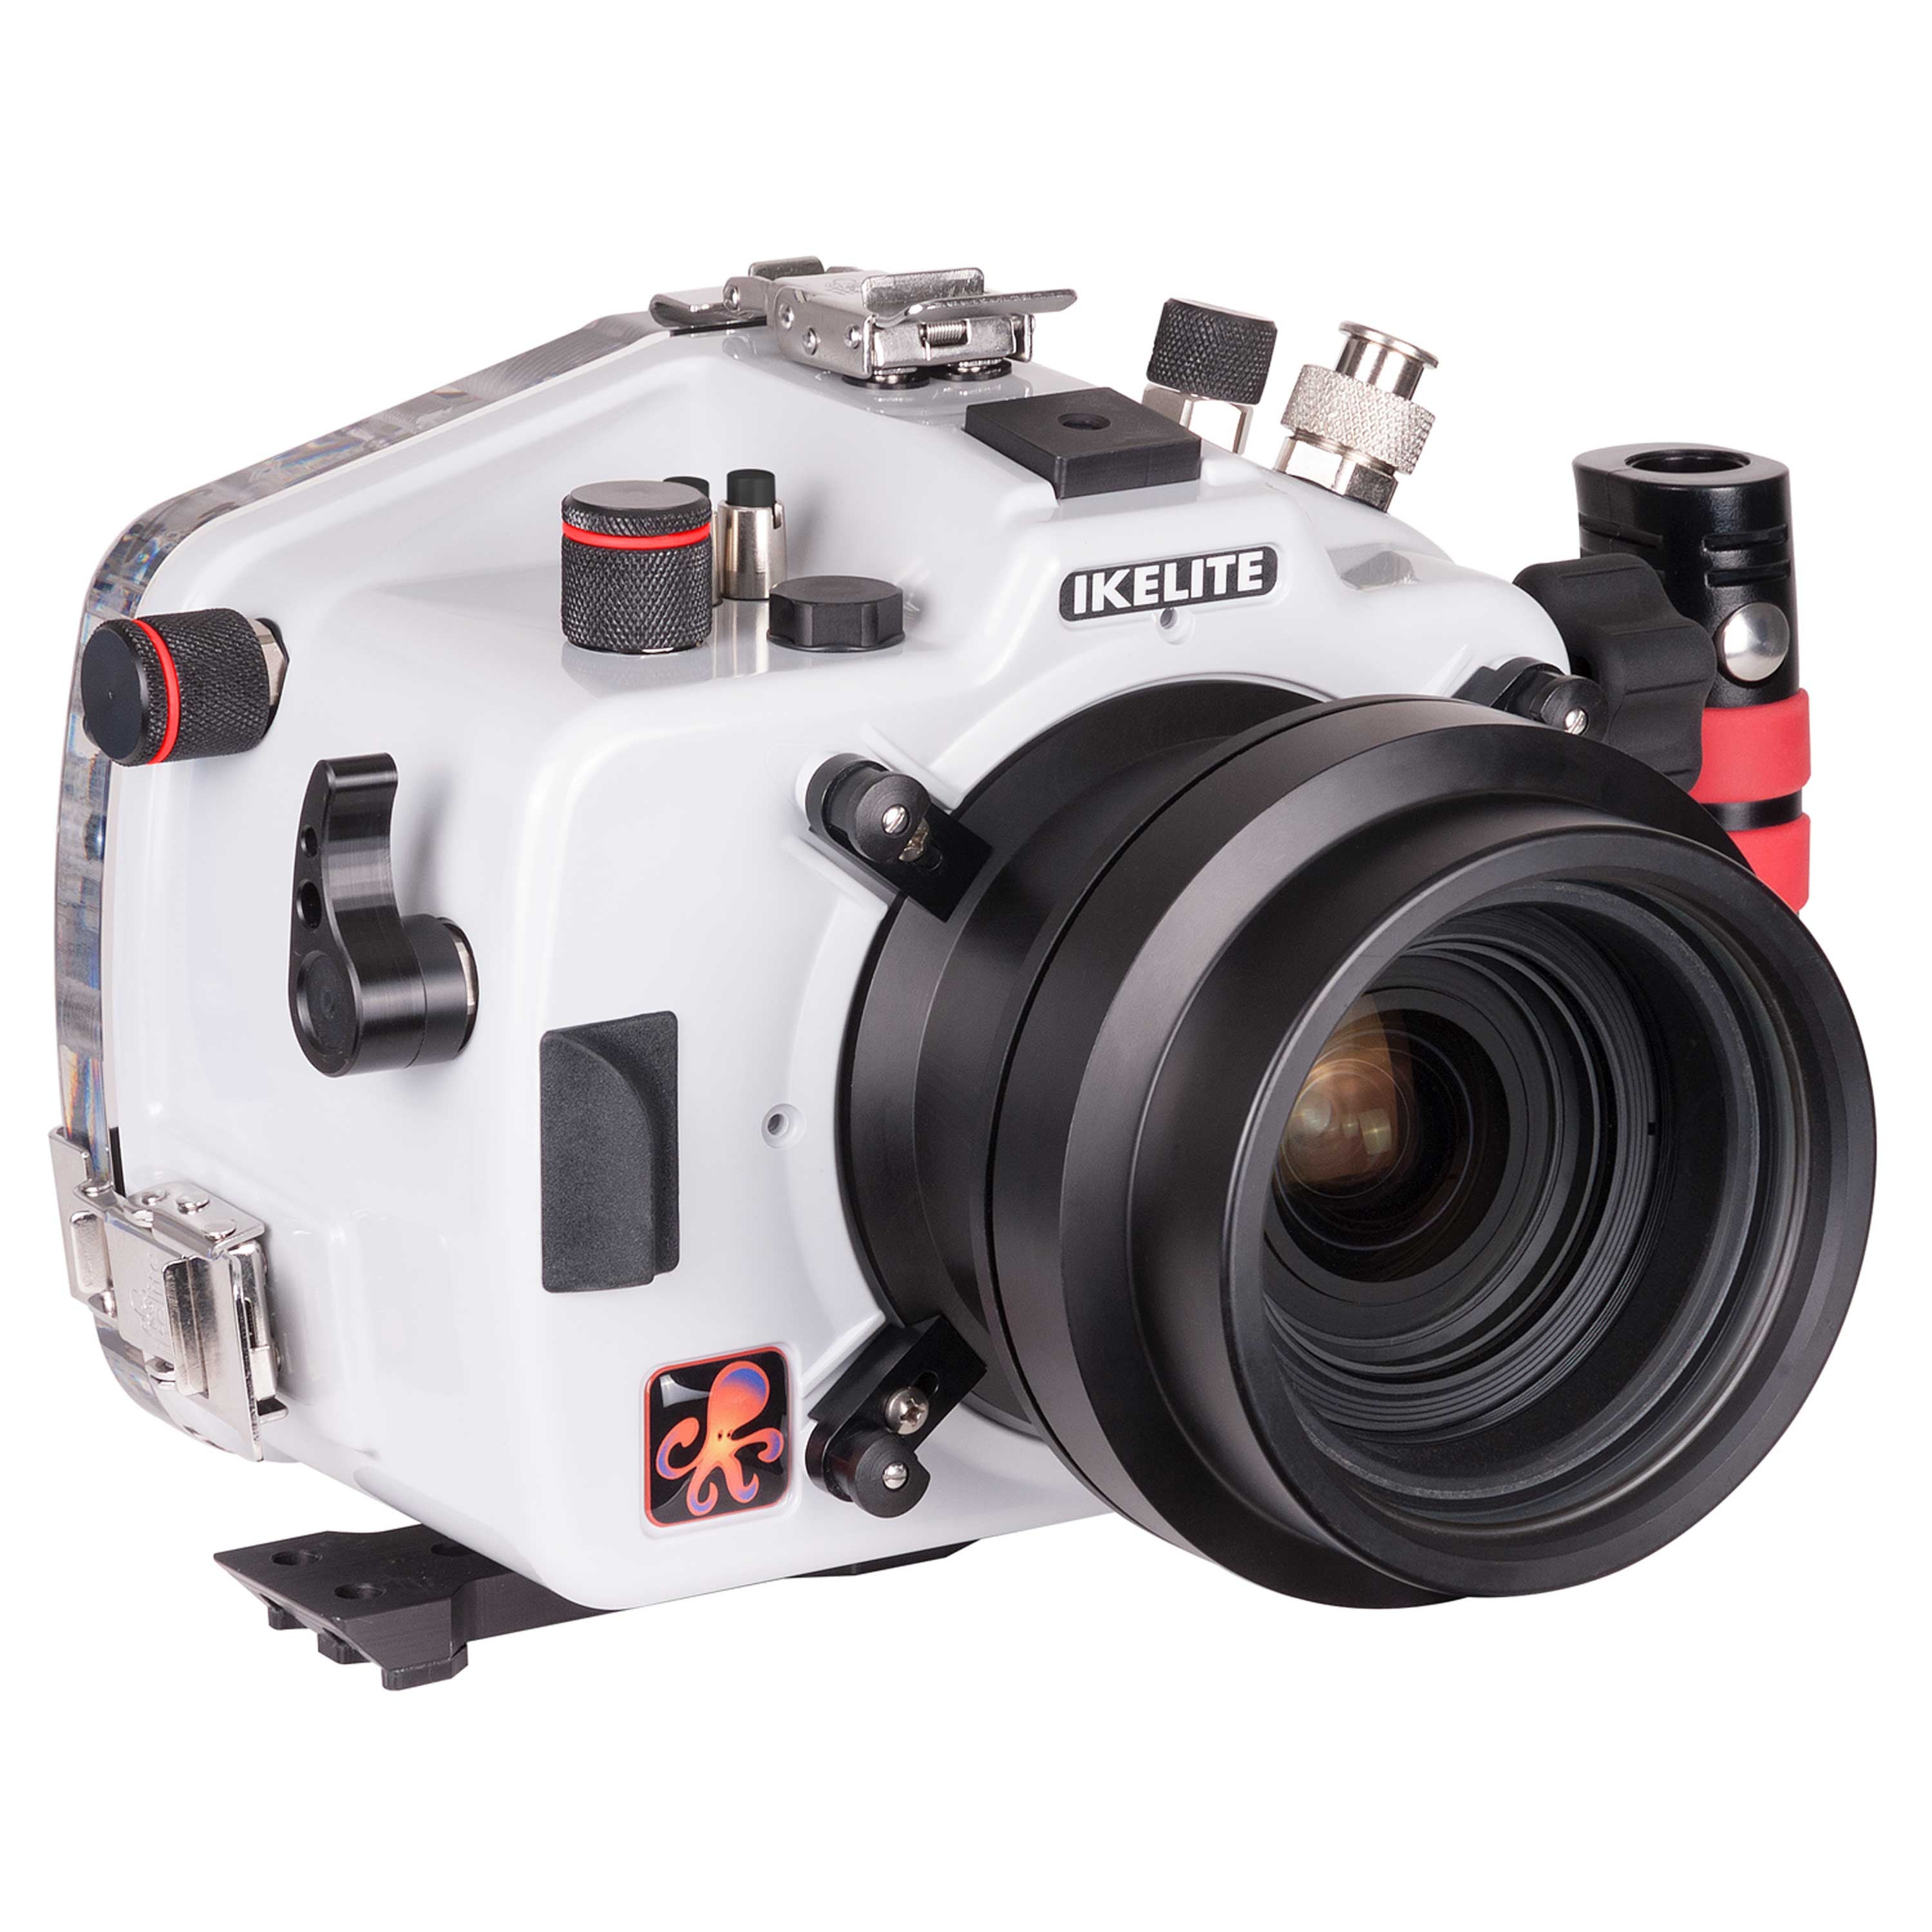 200FL Underwater Housing for Canon EOS 5D Mark III, 5D Mark IV, 5DS, 5DS R DSLR Cameras